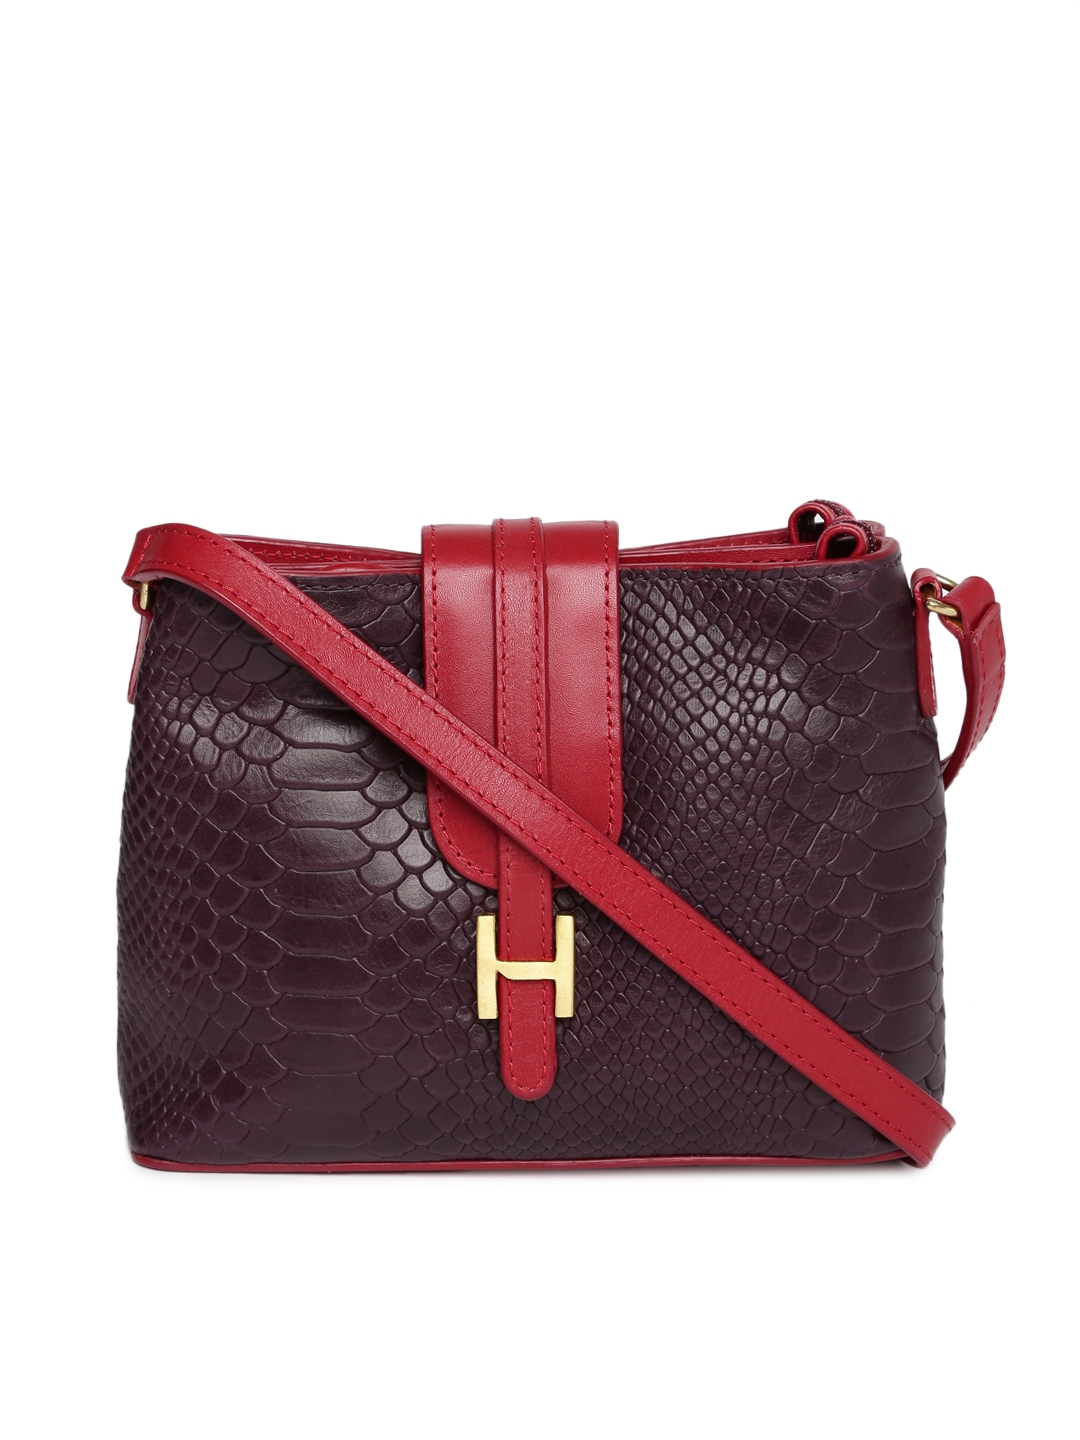 Buy Hidesign Burgundy & Red Textured Sling Bag - Handbags for Women 2365928 | Myntra